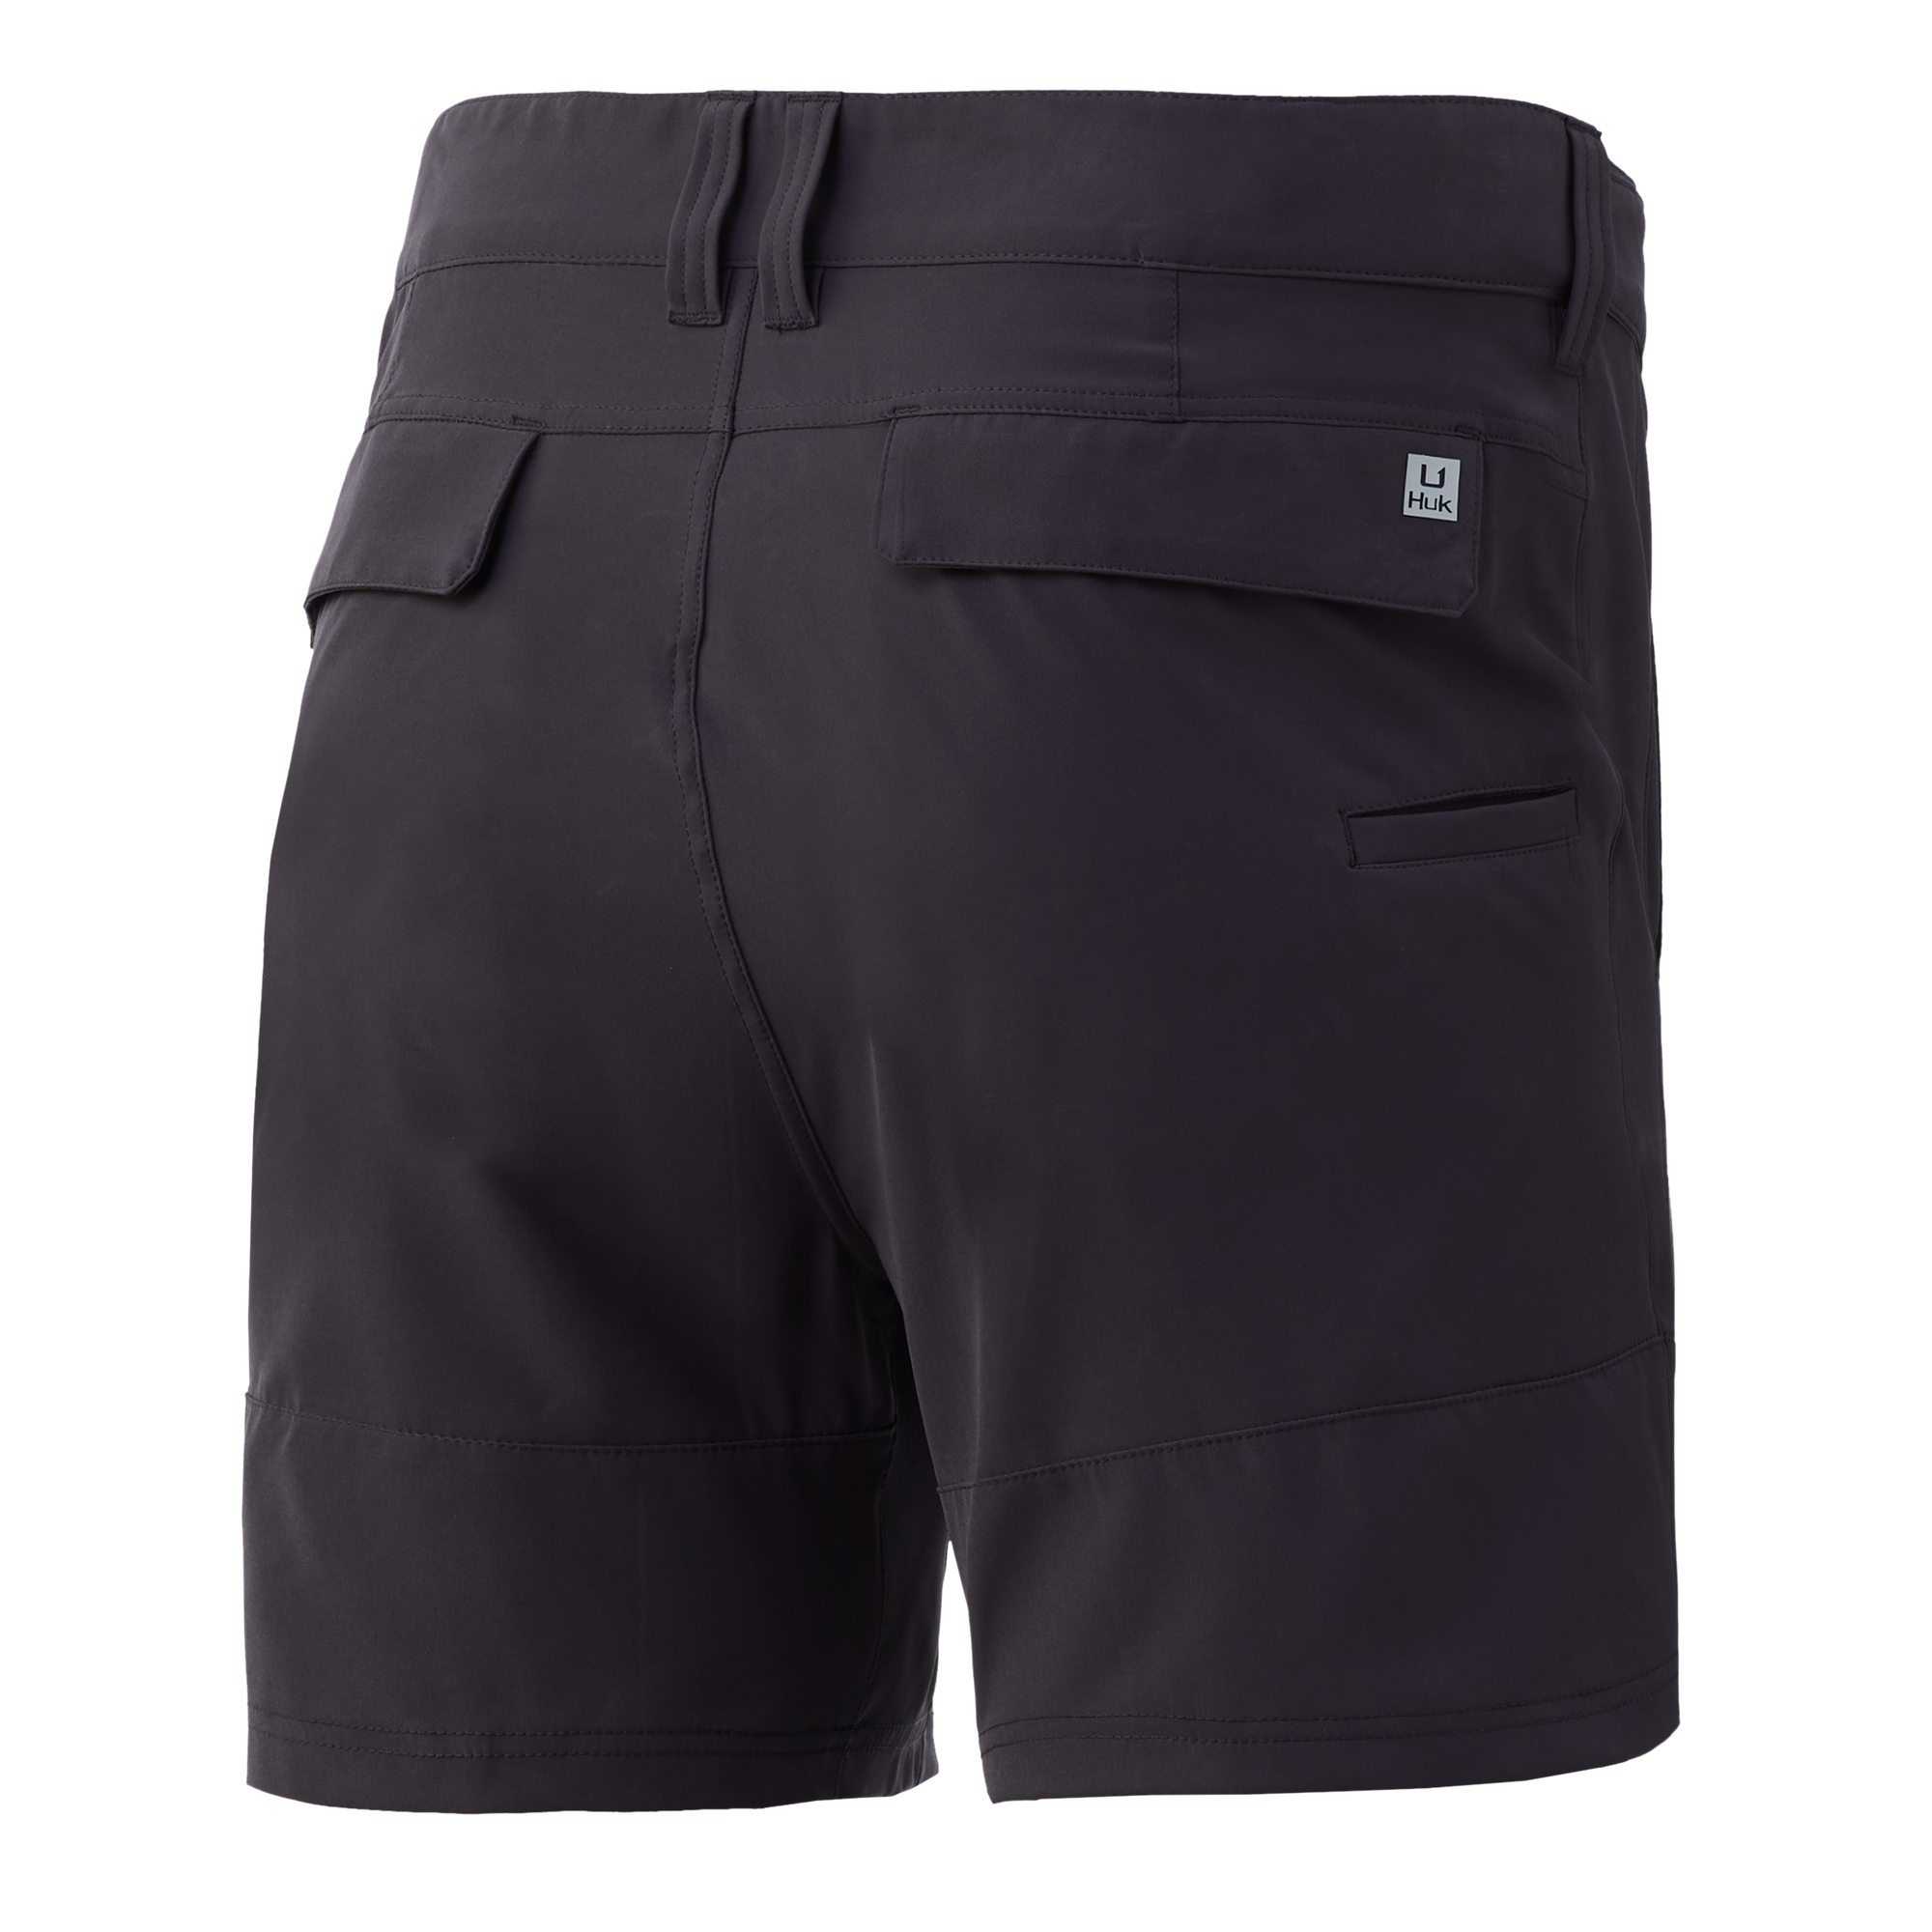 Huk Men's Lowcountry 6” Shorts, Large, Iron